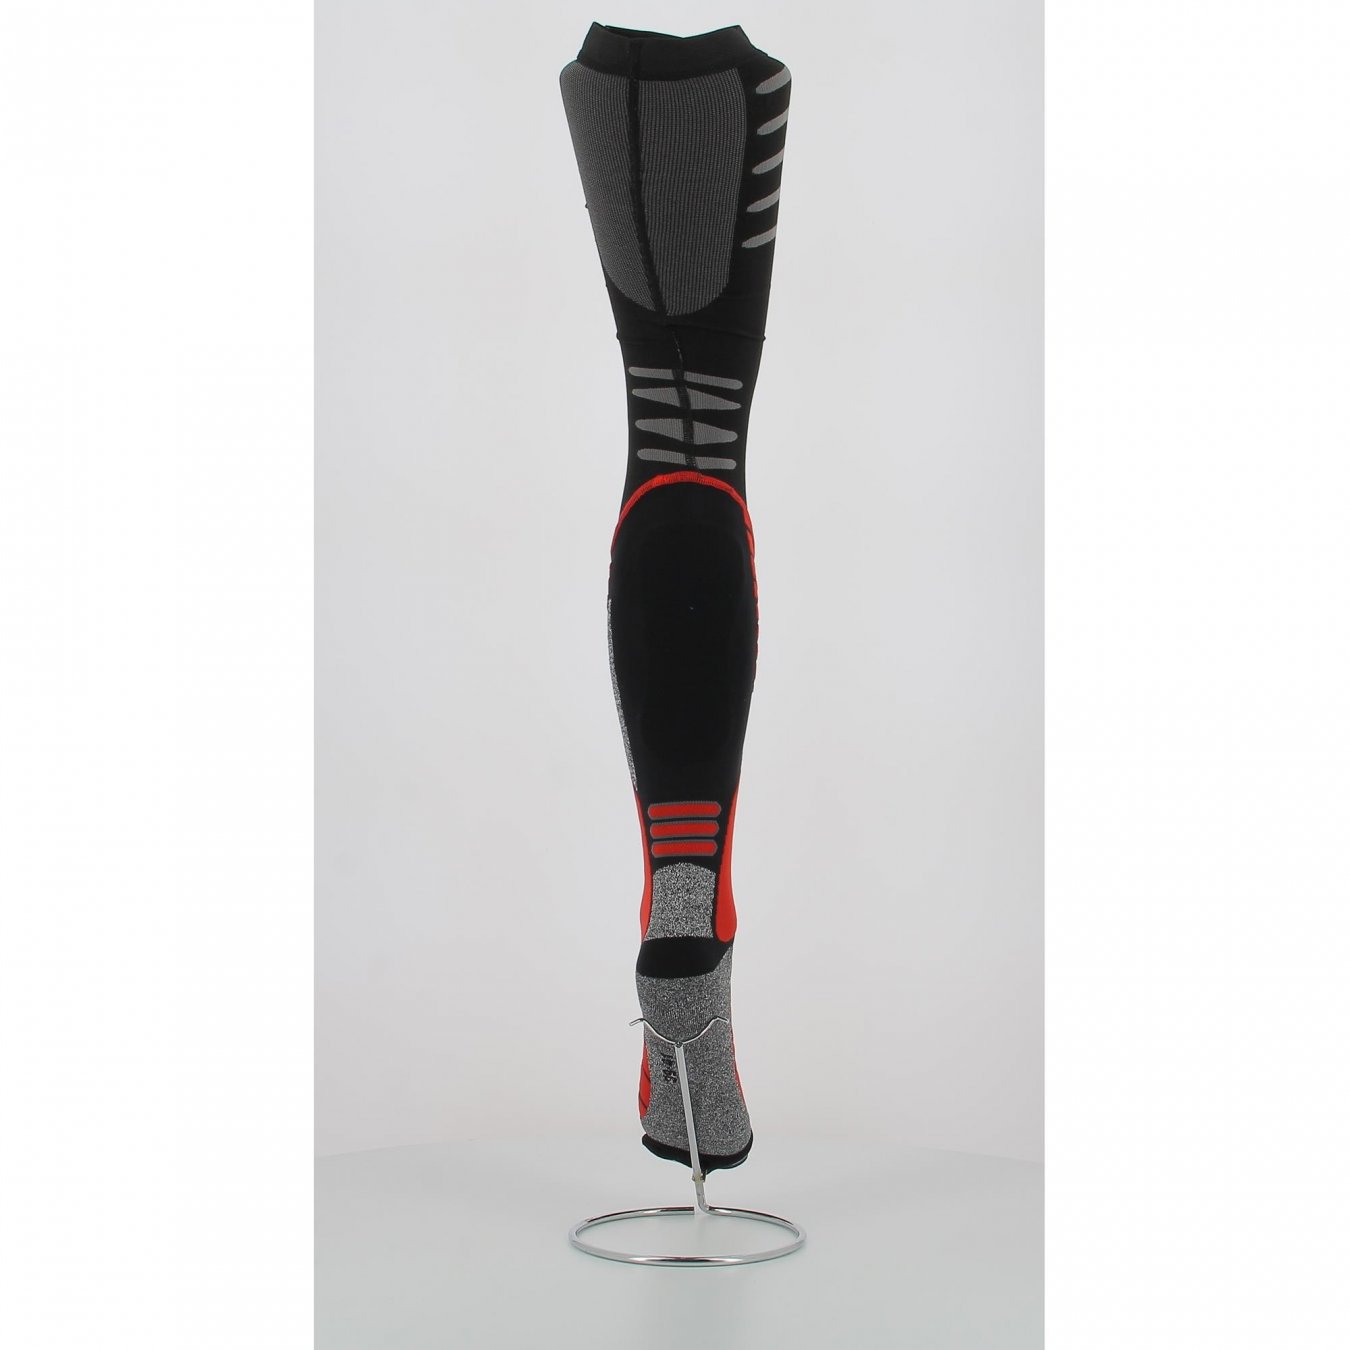 Acerbis X-leg Pro Socks